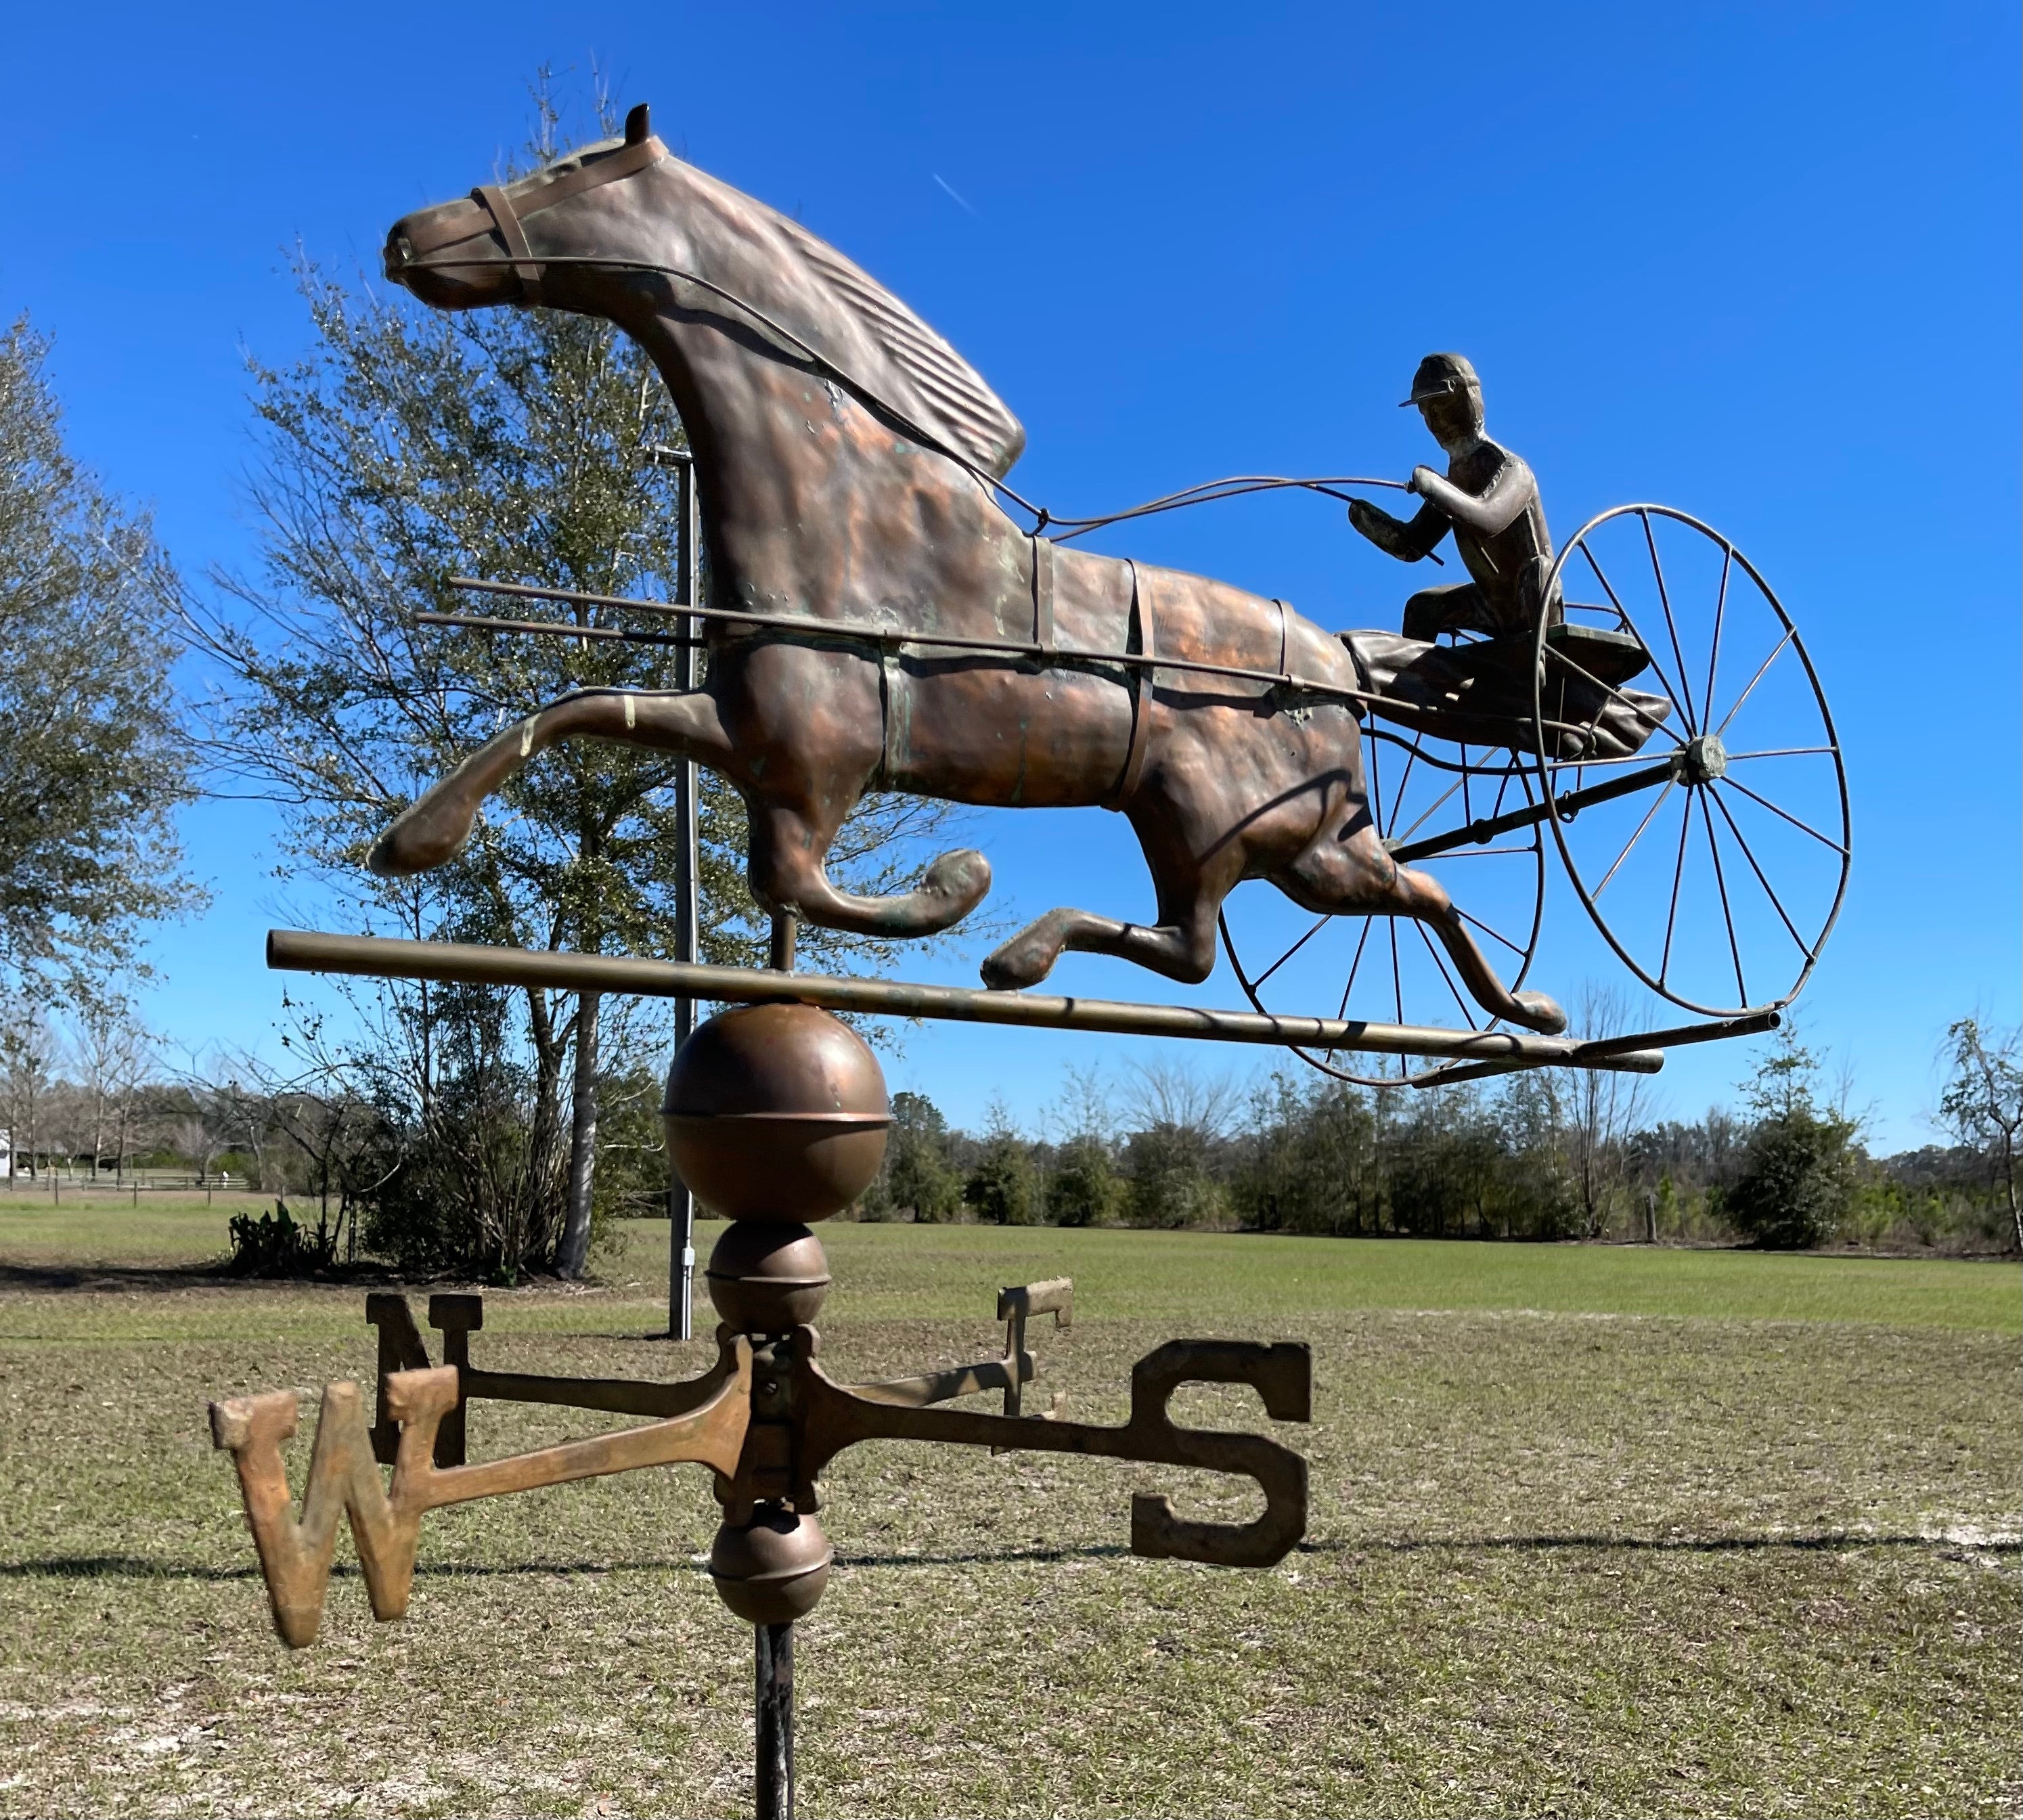 Antique Children’s Sulky Horse Play 2-Wheel Cart Victorian Edwardian  Reenactment